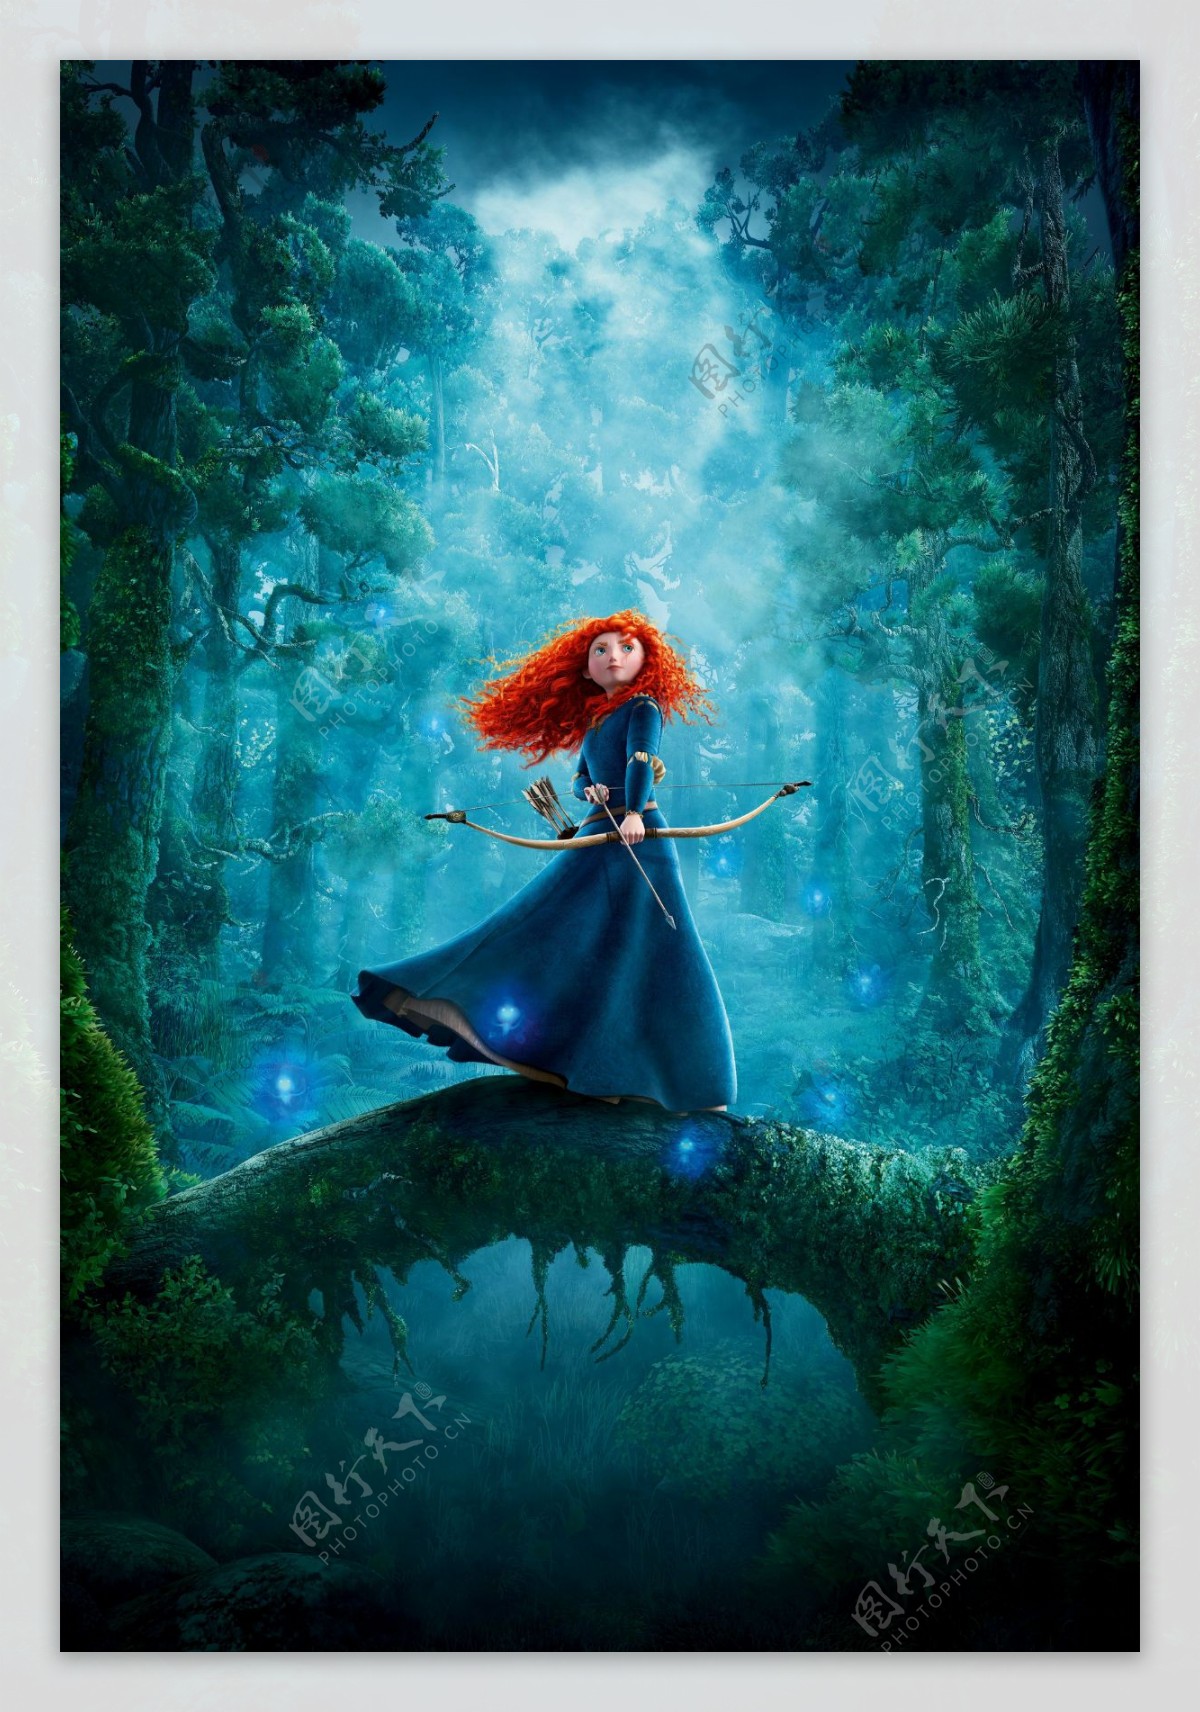 Latest (and Most Beautiful!) Brave Trailer from Disney Pixar - Zannaland